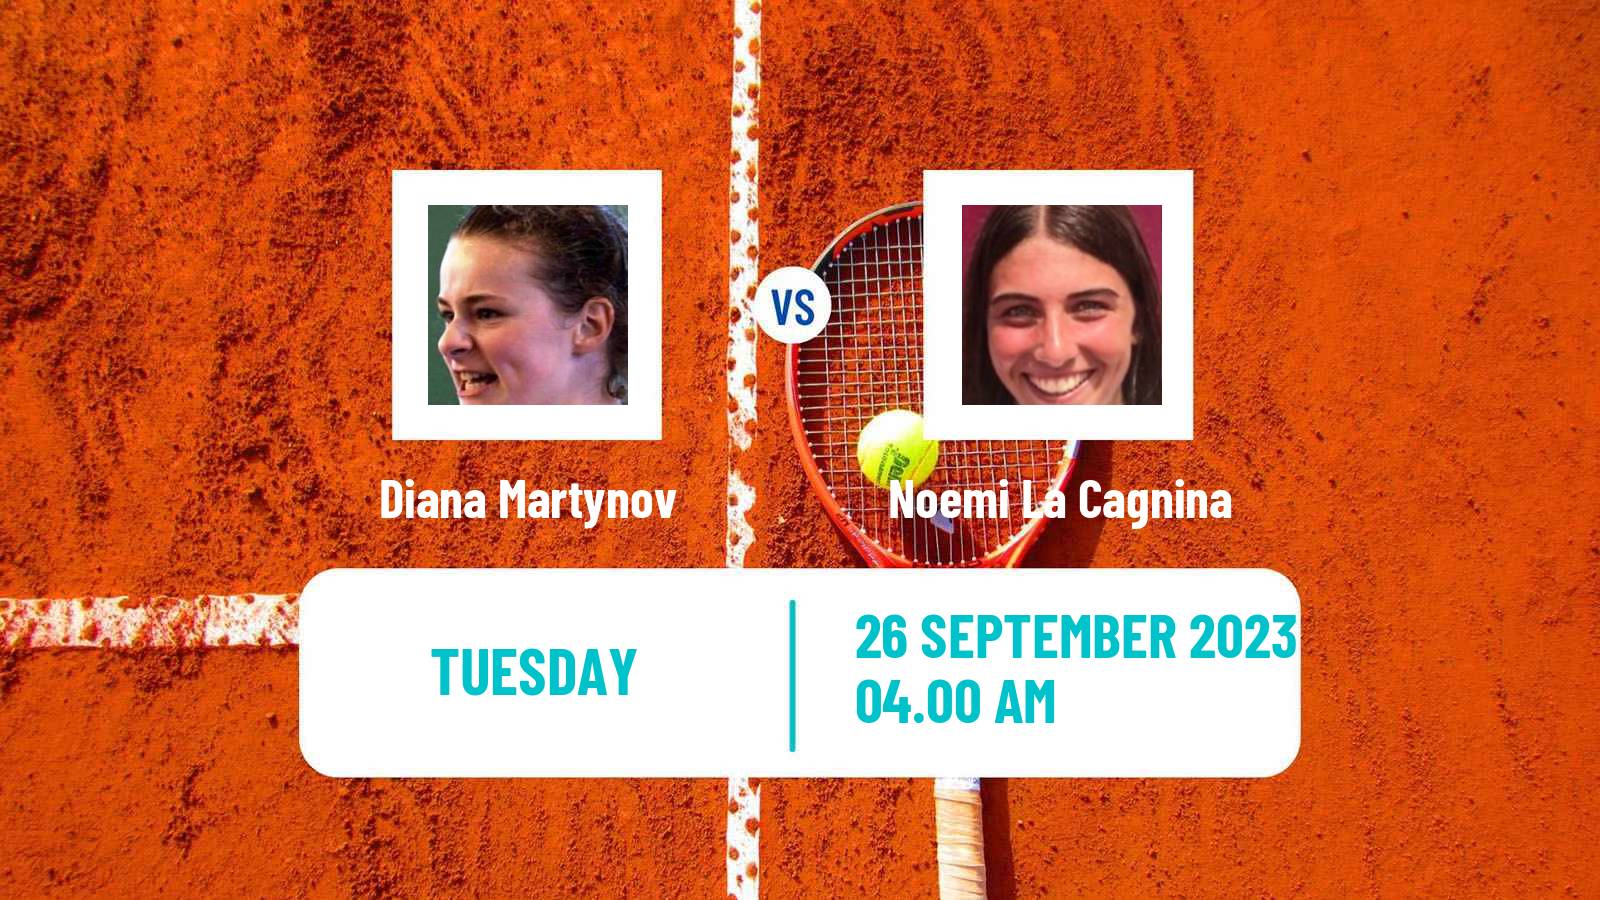 Tennis ITF W15 Monastir 34 Women Diana Martynov - Noemi La Cagnina